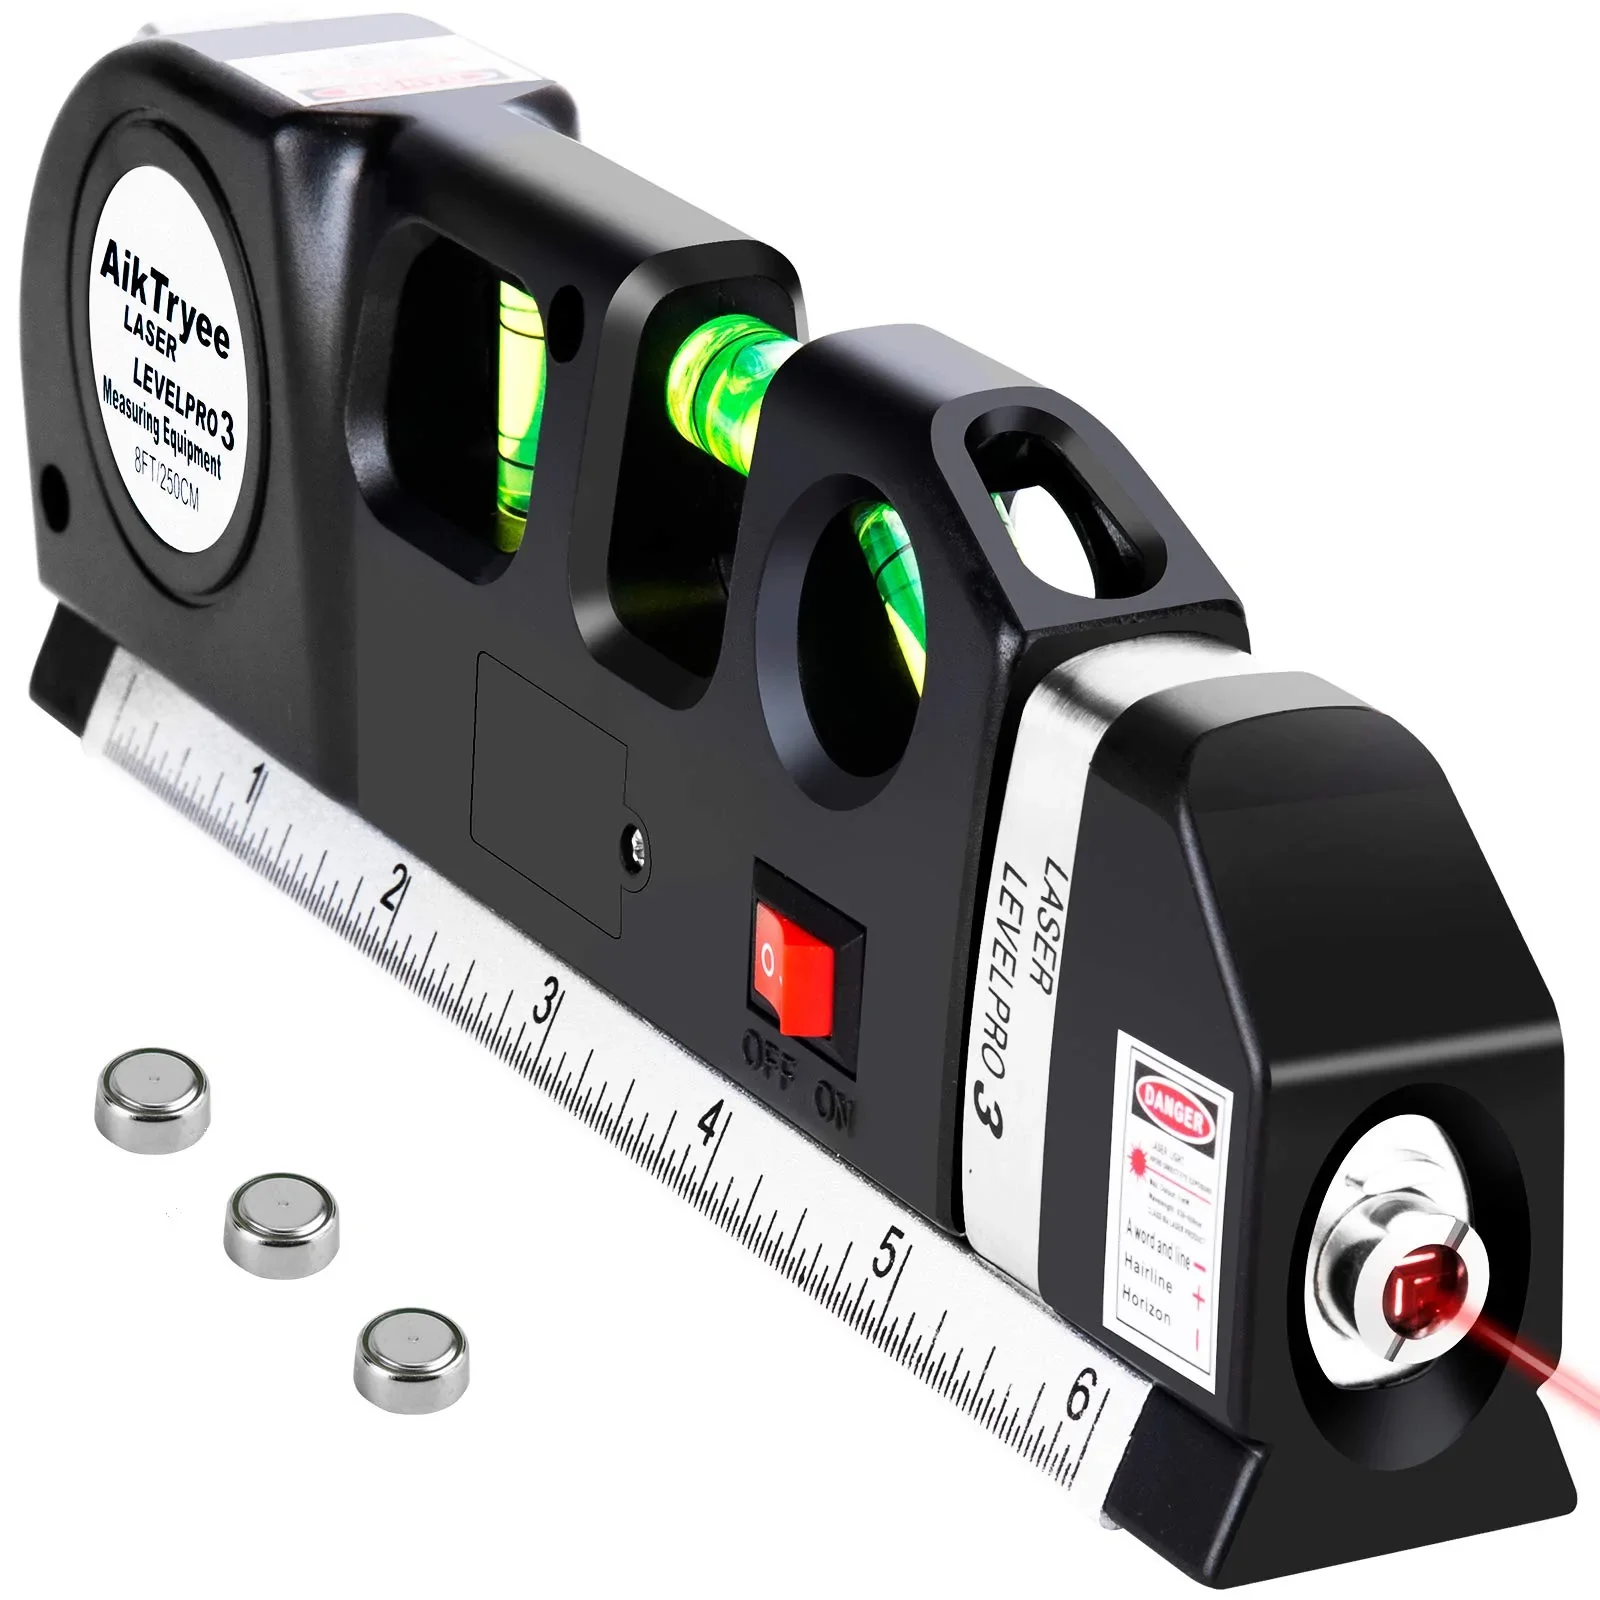 

New Laser Level Horizon Vertical Measure 8FT Aligner Standard and Metric Rulers Multipurpose Measure Level Laser Black